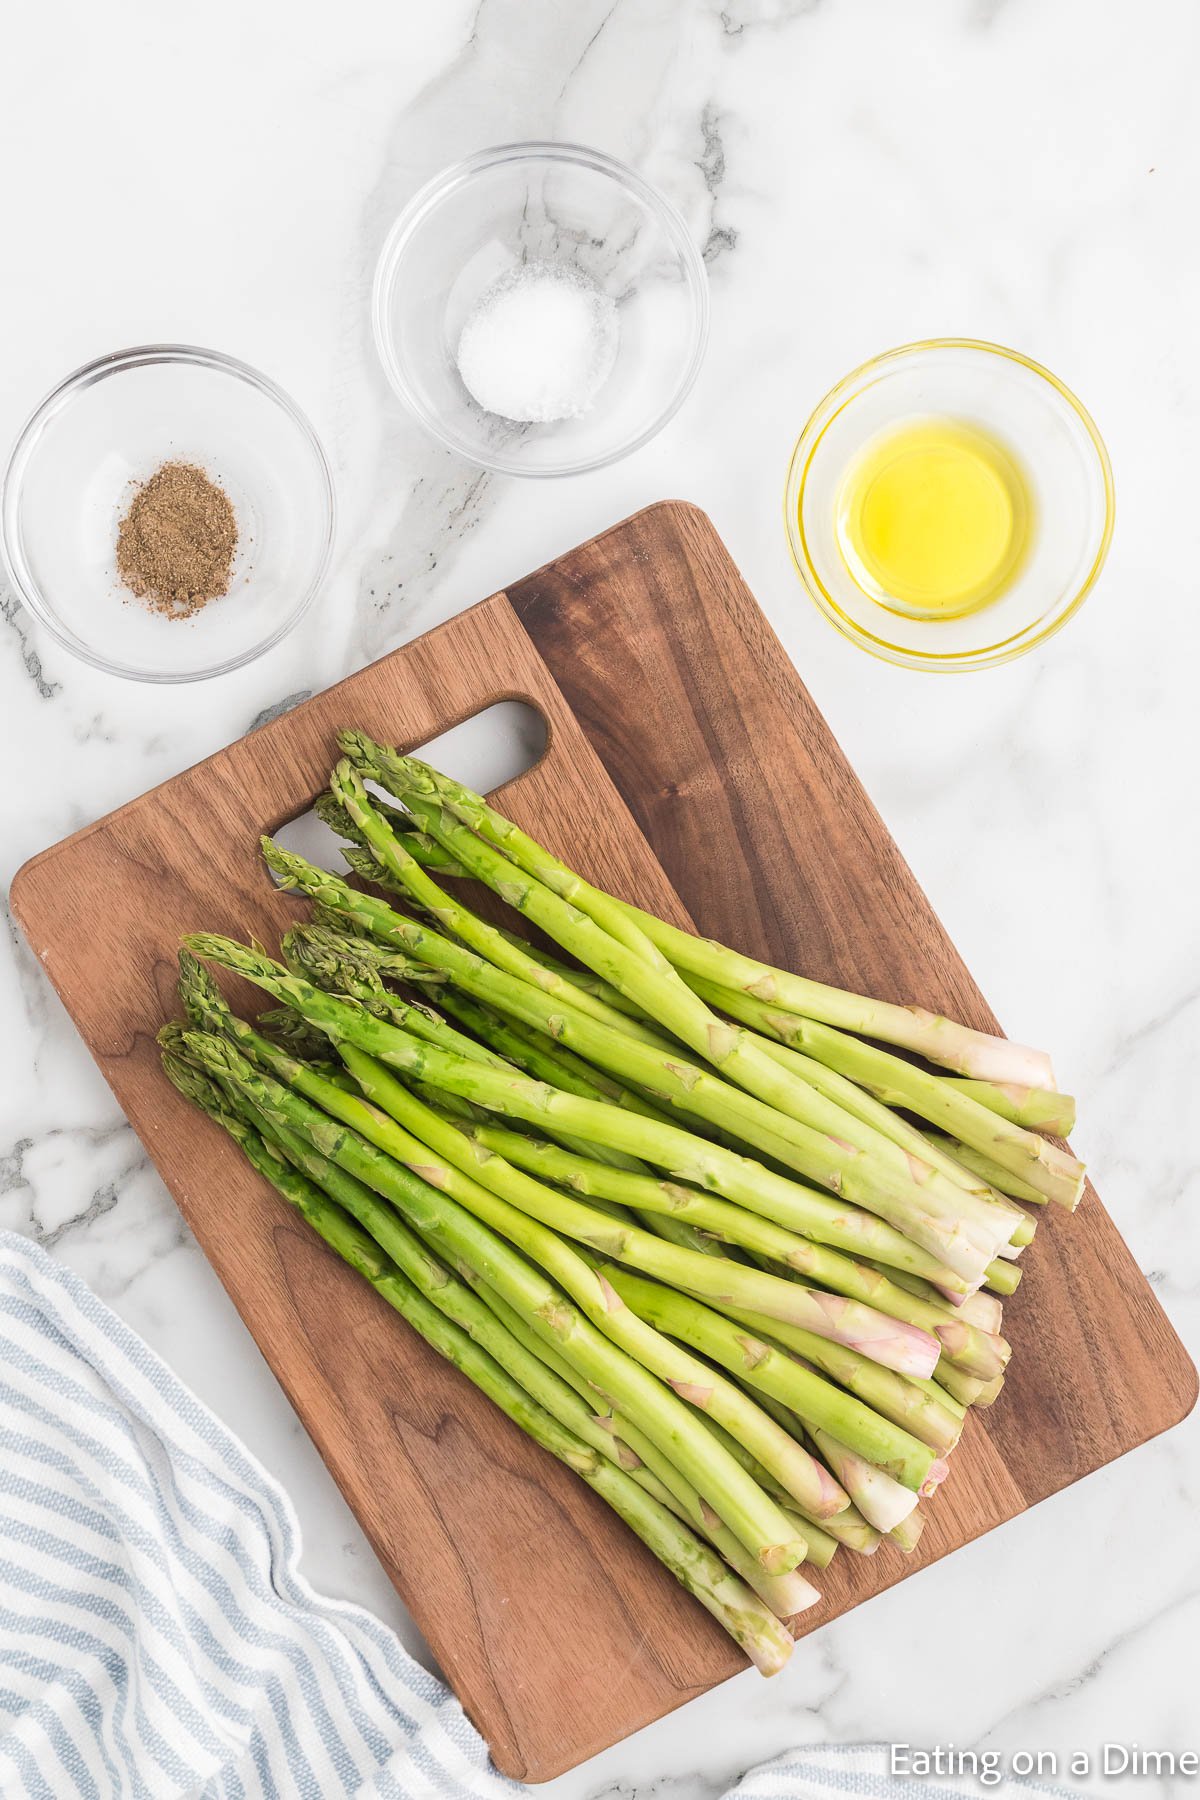 Air Fryer Asparagus Ingredients - fresh asparagus, olive oil, pepper, salt